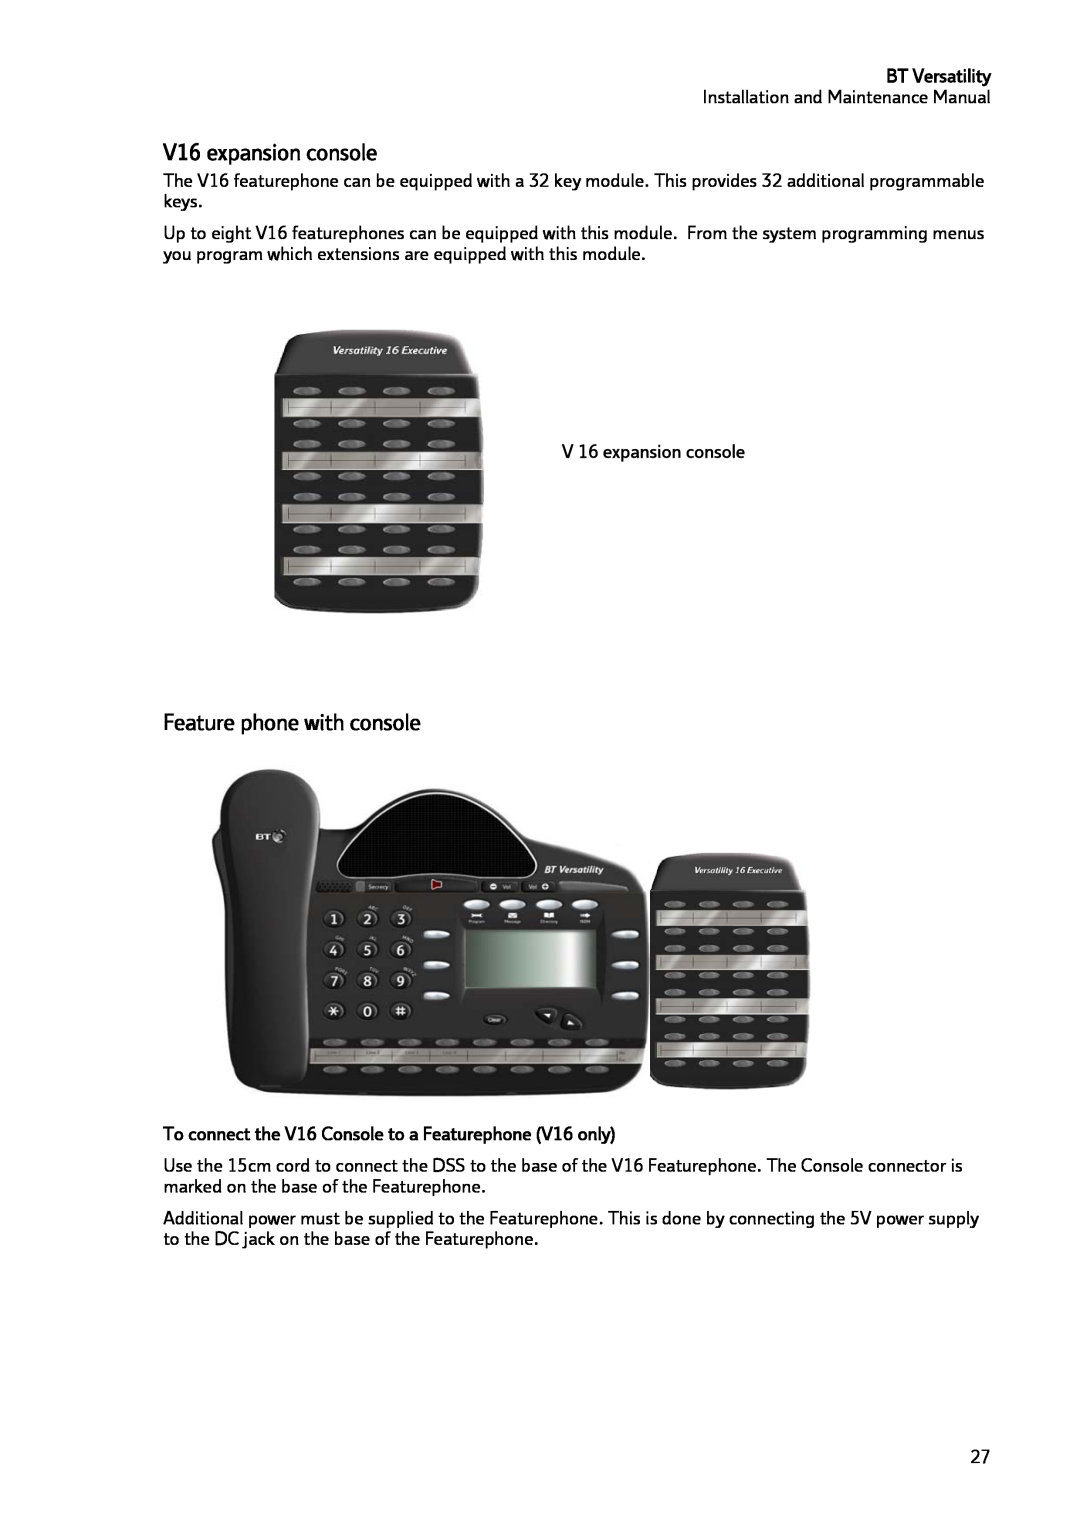 BT BT Versatility manual V16 expansion console, Feature phone with console, V 16 expansion console 